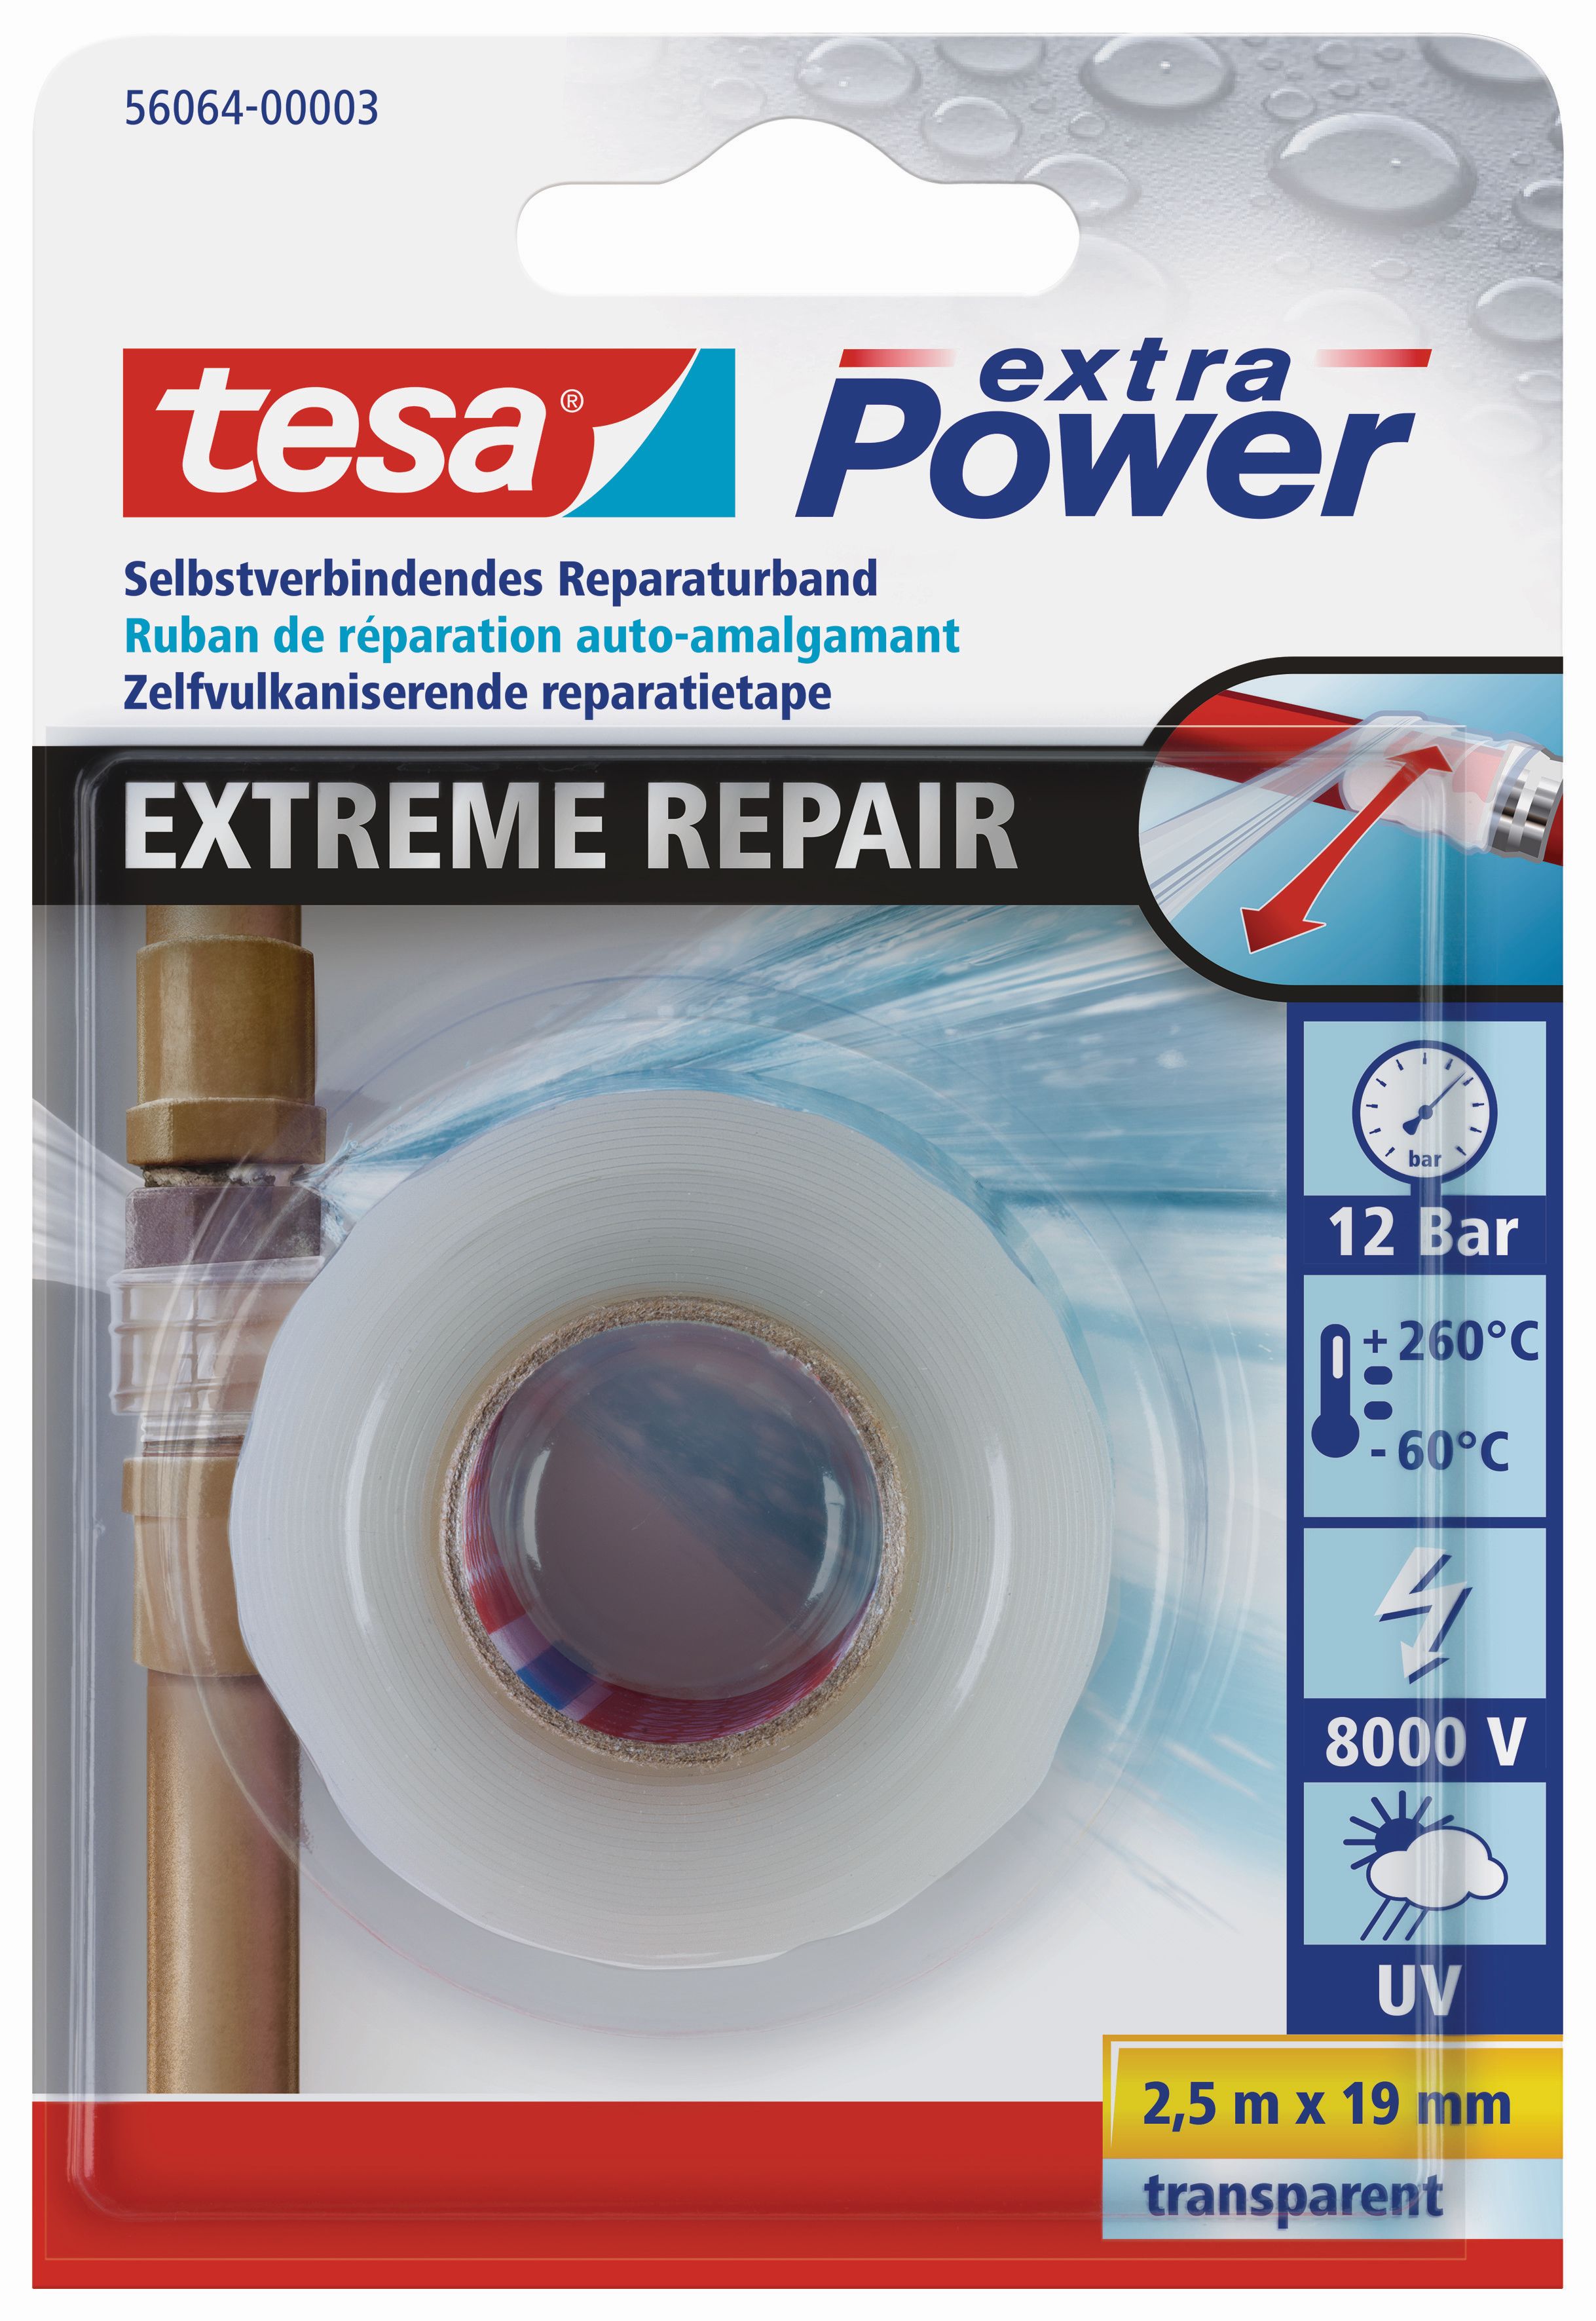 tesa® extra Power Extreme Repair Reparaturband